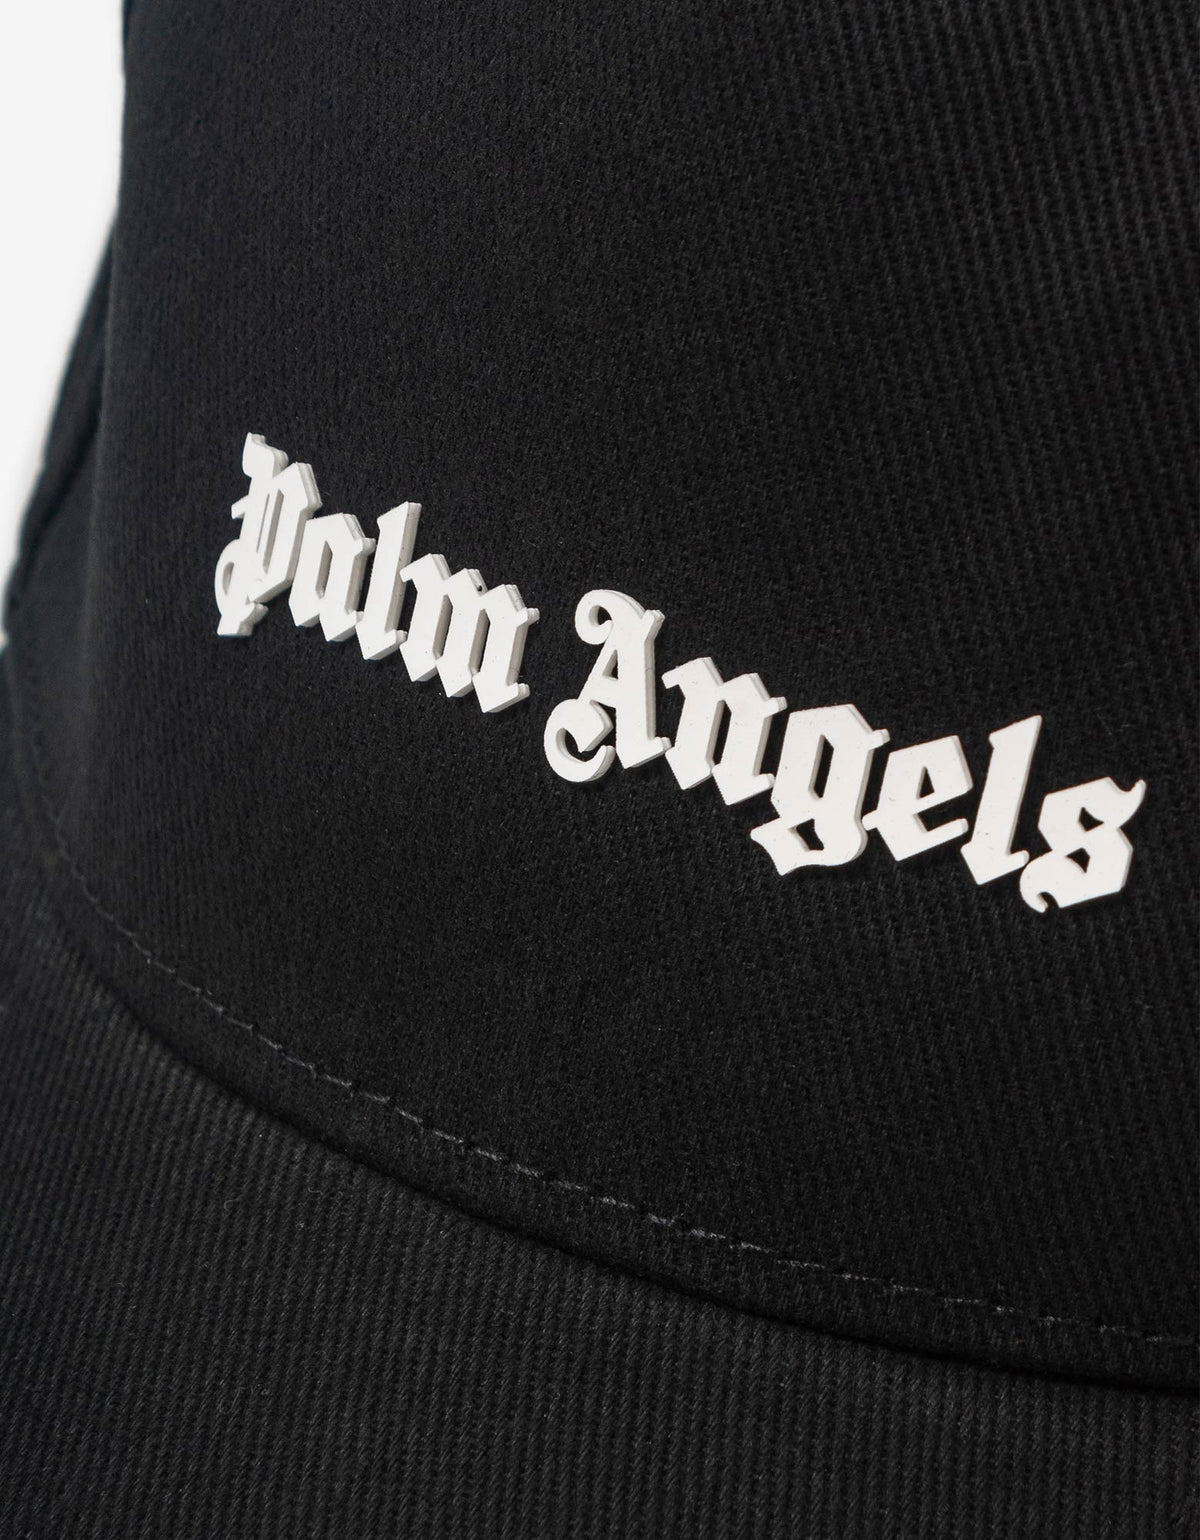 Palm Angels Black Logo Cap